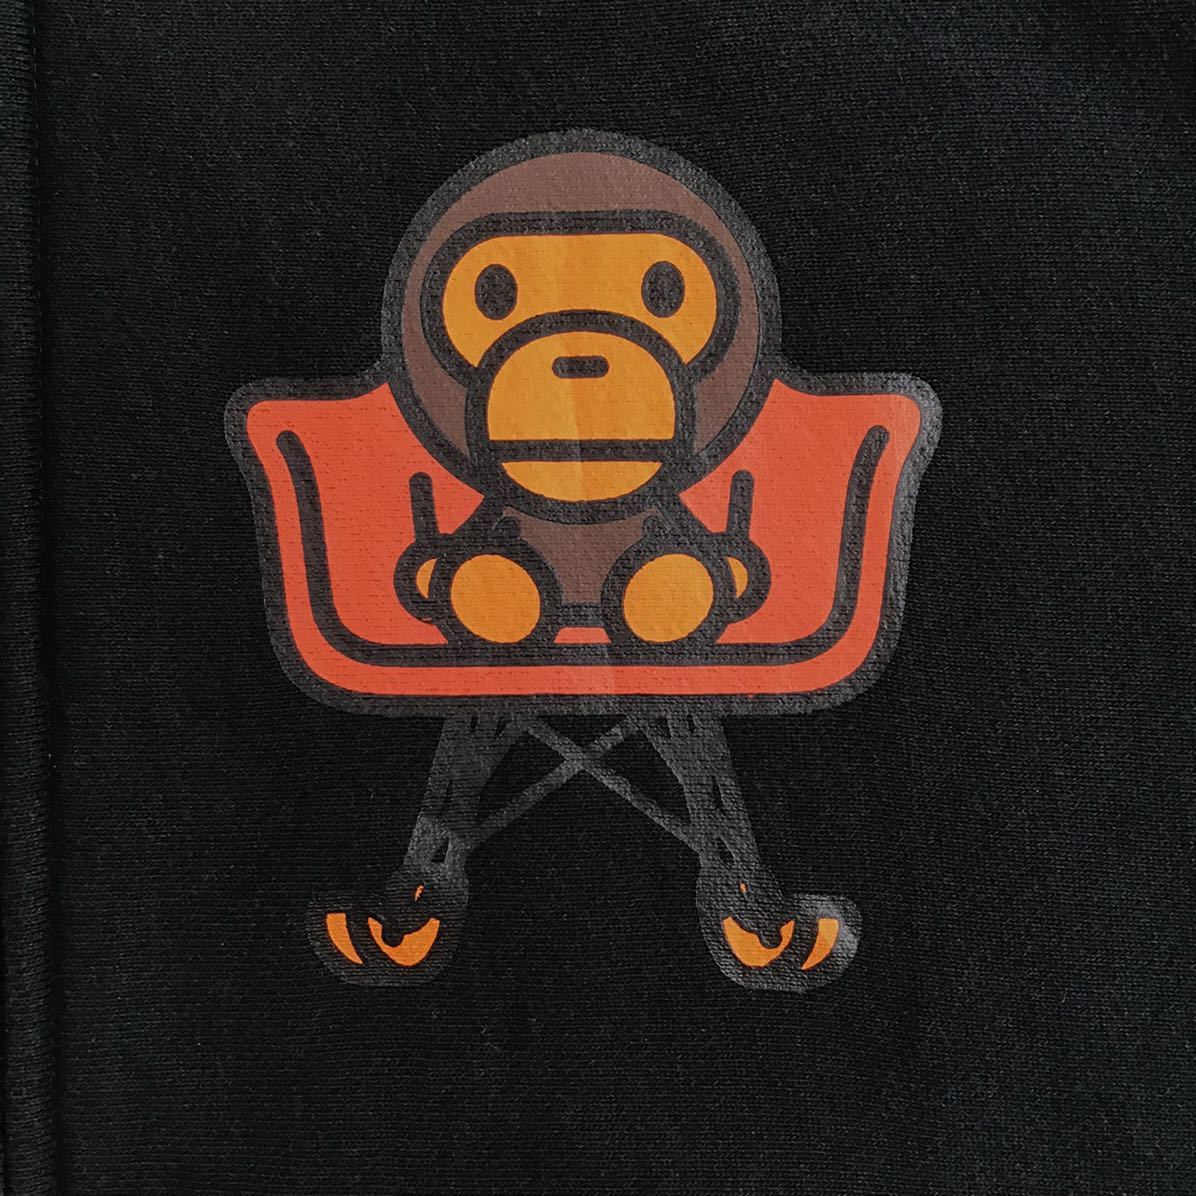 Chair milo フルジップ パーカー Sサイズ Black a bathing ape BAPE full zip hoodie エイプ ベイプ アベイシングエイプ マイロ nn2_画像4